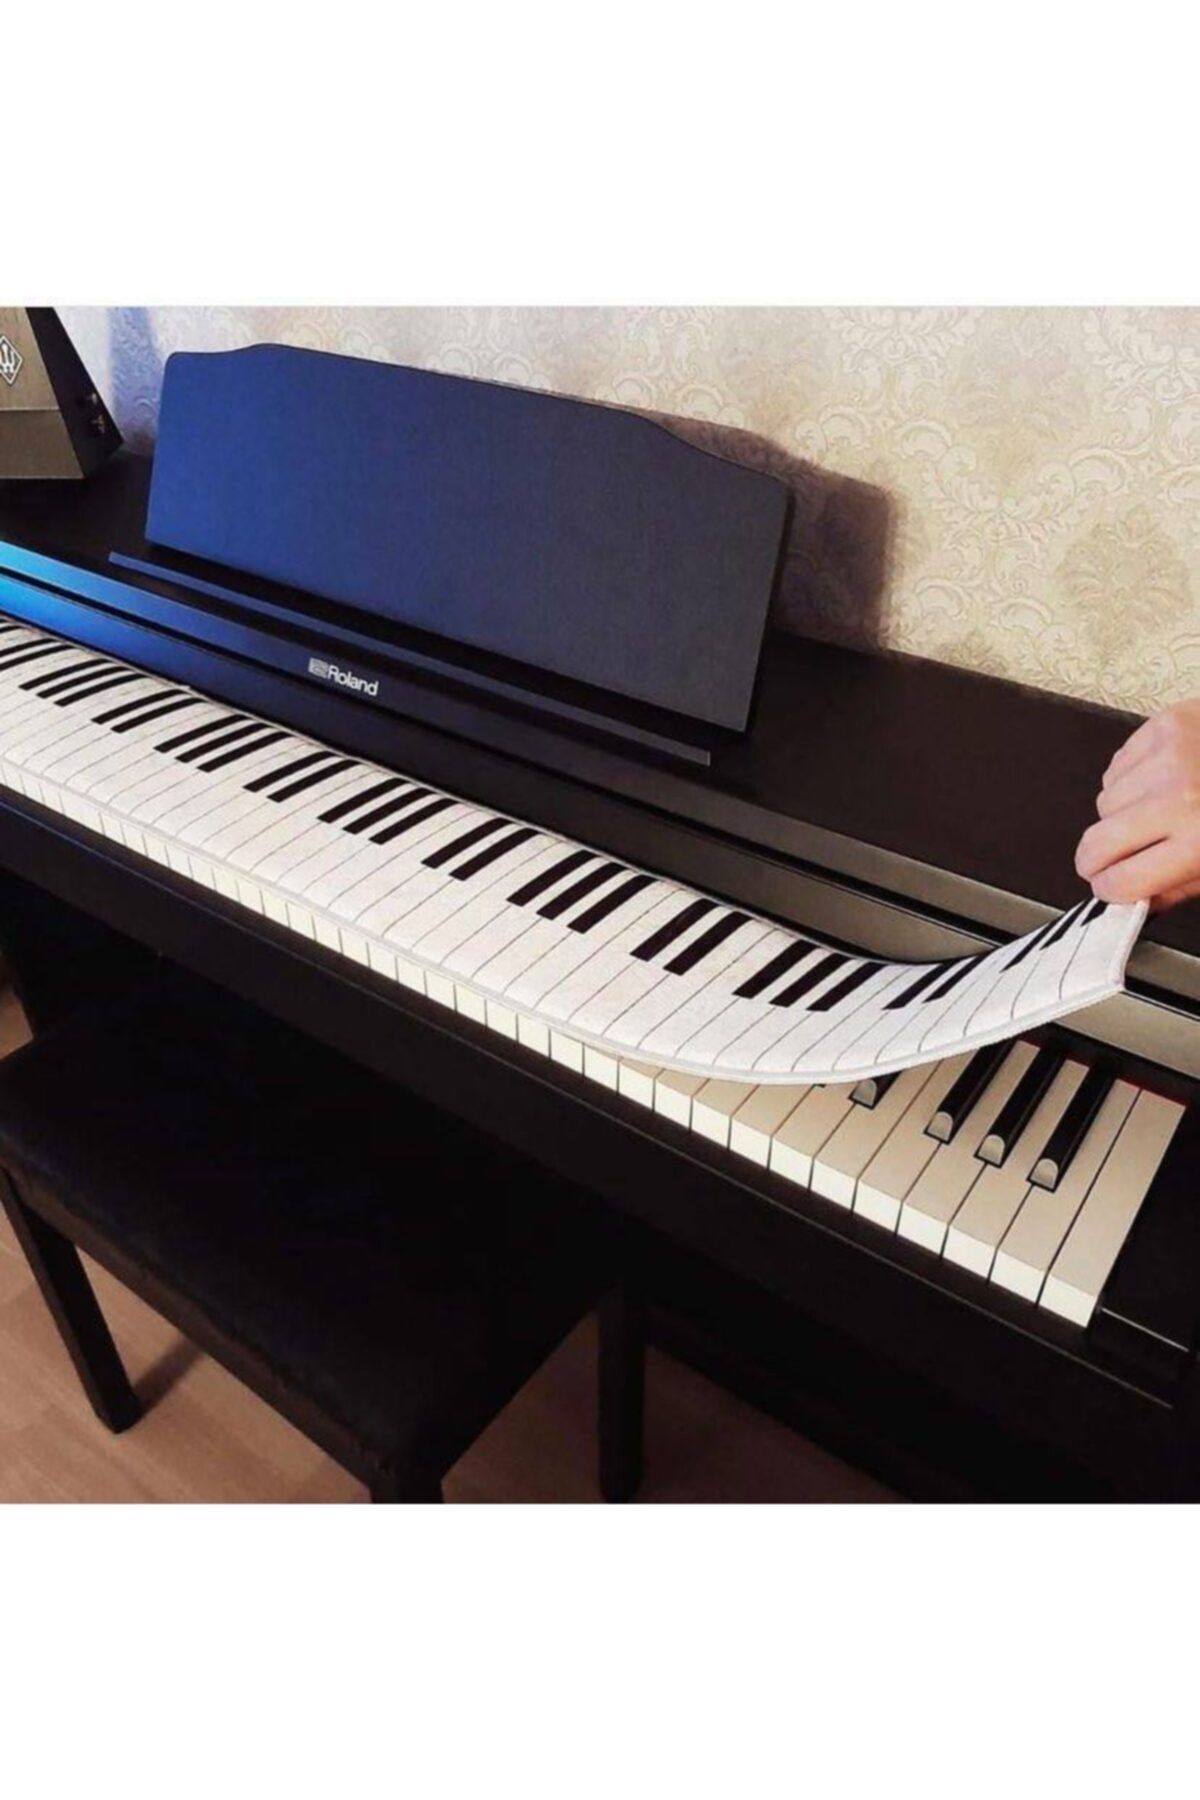 Herşey Nota Piyano Desenli Piyano Tuş Takımı Örtüsü